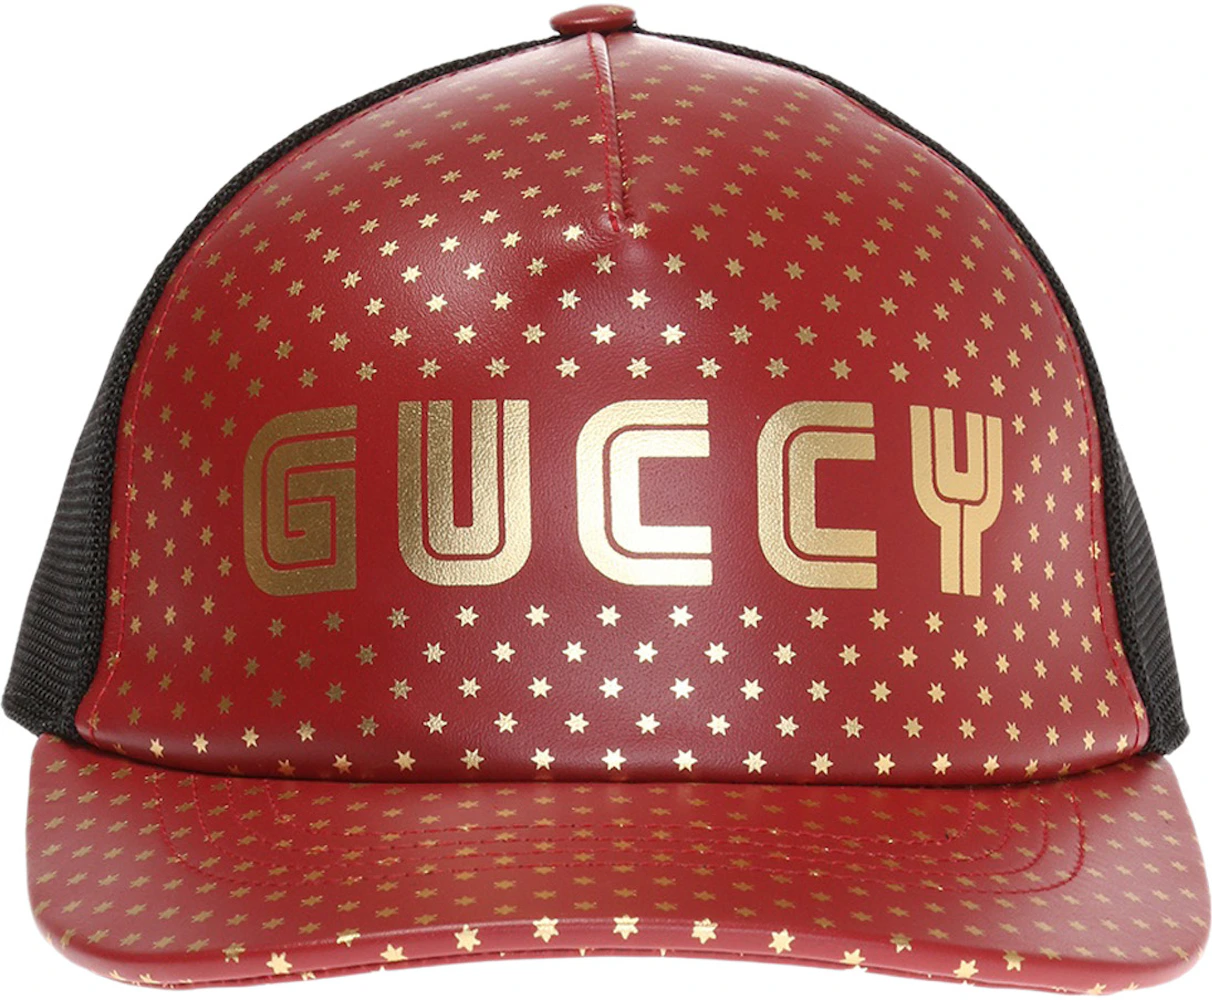 Gucci Guccy Star Print Baseball Velcro Strap Cap Red/Black/Gold - US